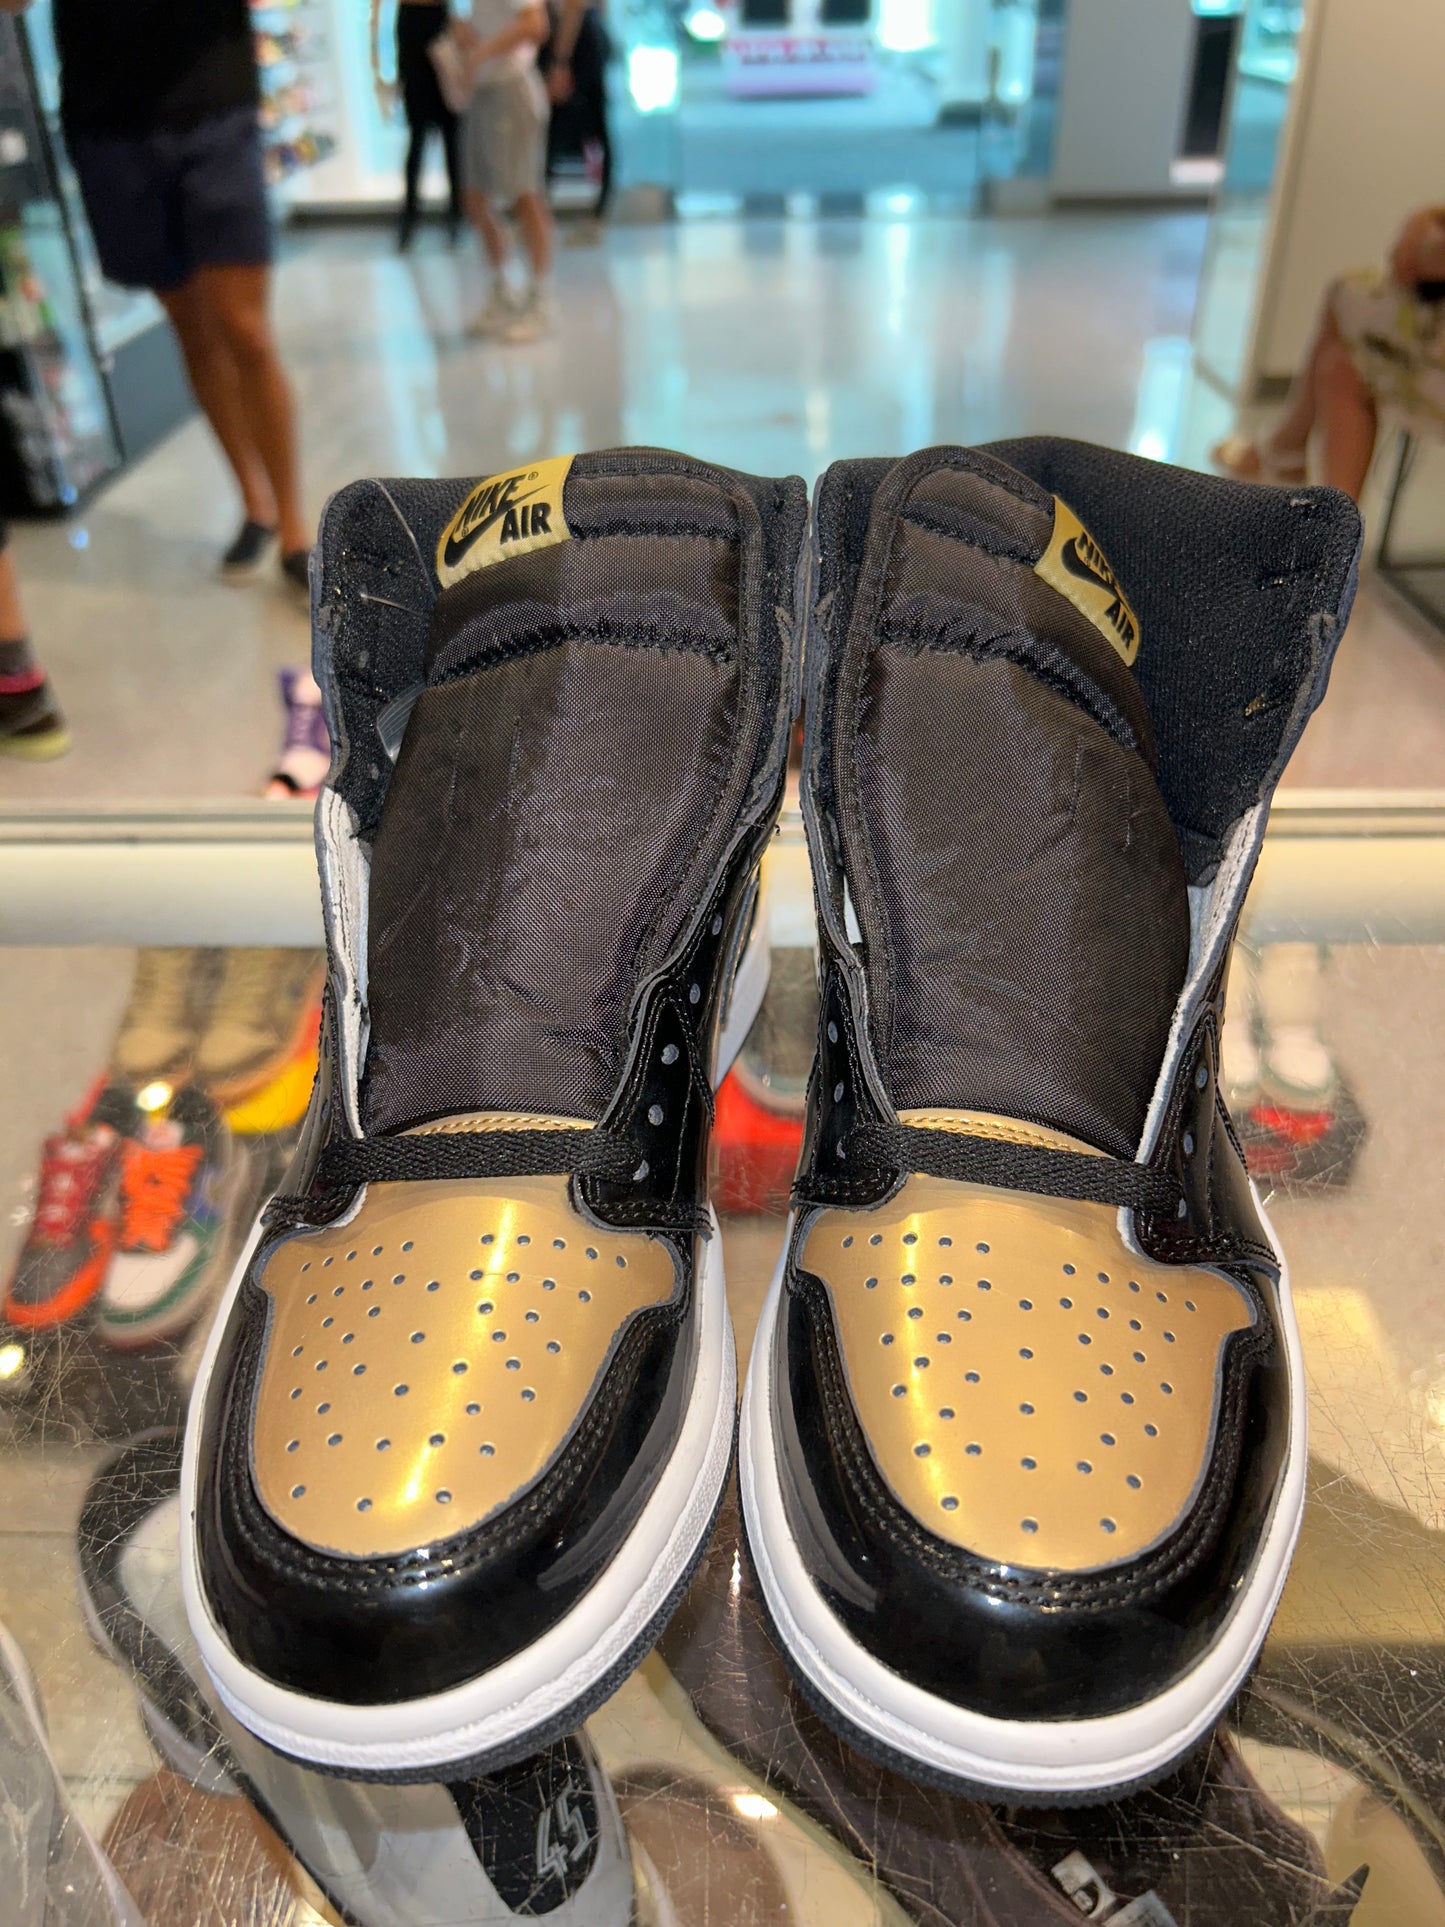 Size 7.5 Air Jordan 1 “Gold Toe” Brand New (Mall)